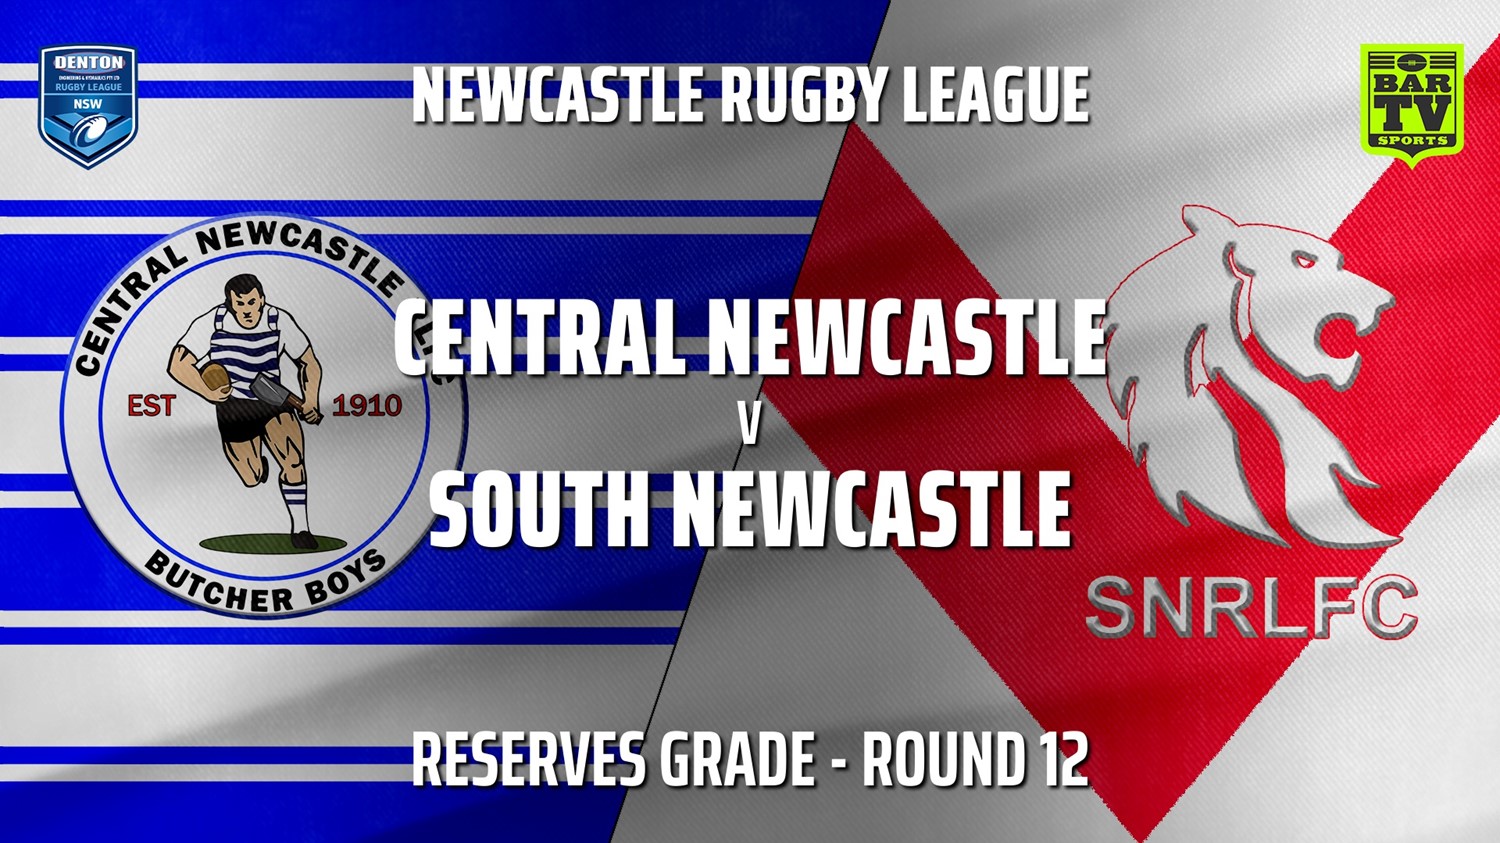 210620-Newcastle Round 12 - Reserves Grade - Central Newcastle v South Newcastle Slate Image